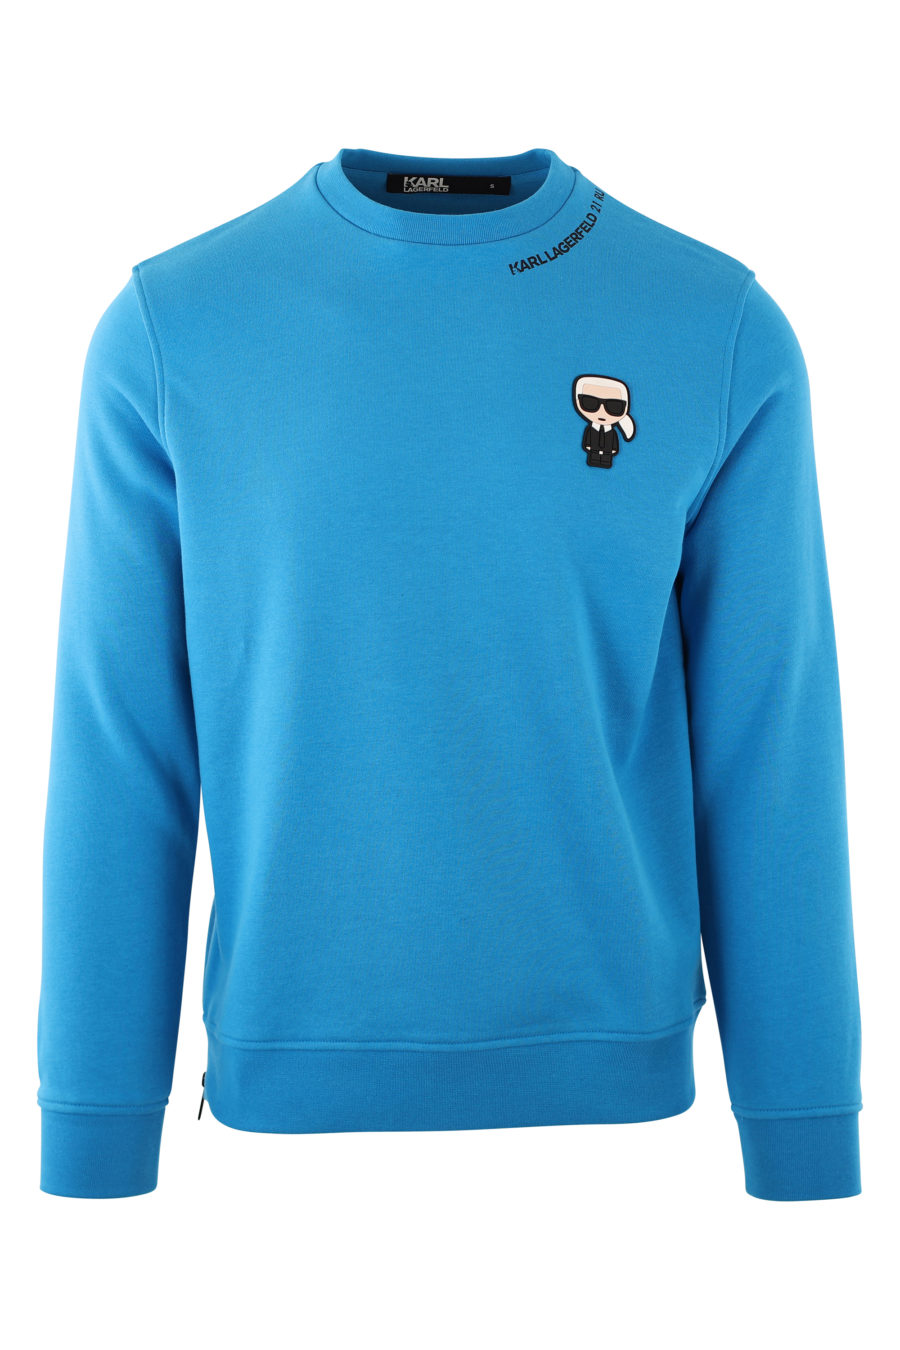 Blaues Sweatshirt mit Gummilogo - IMG 2102